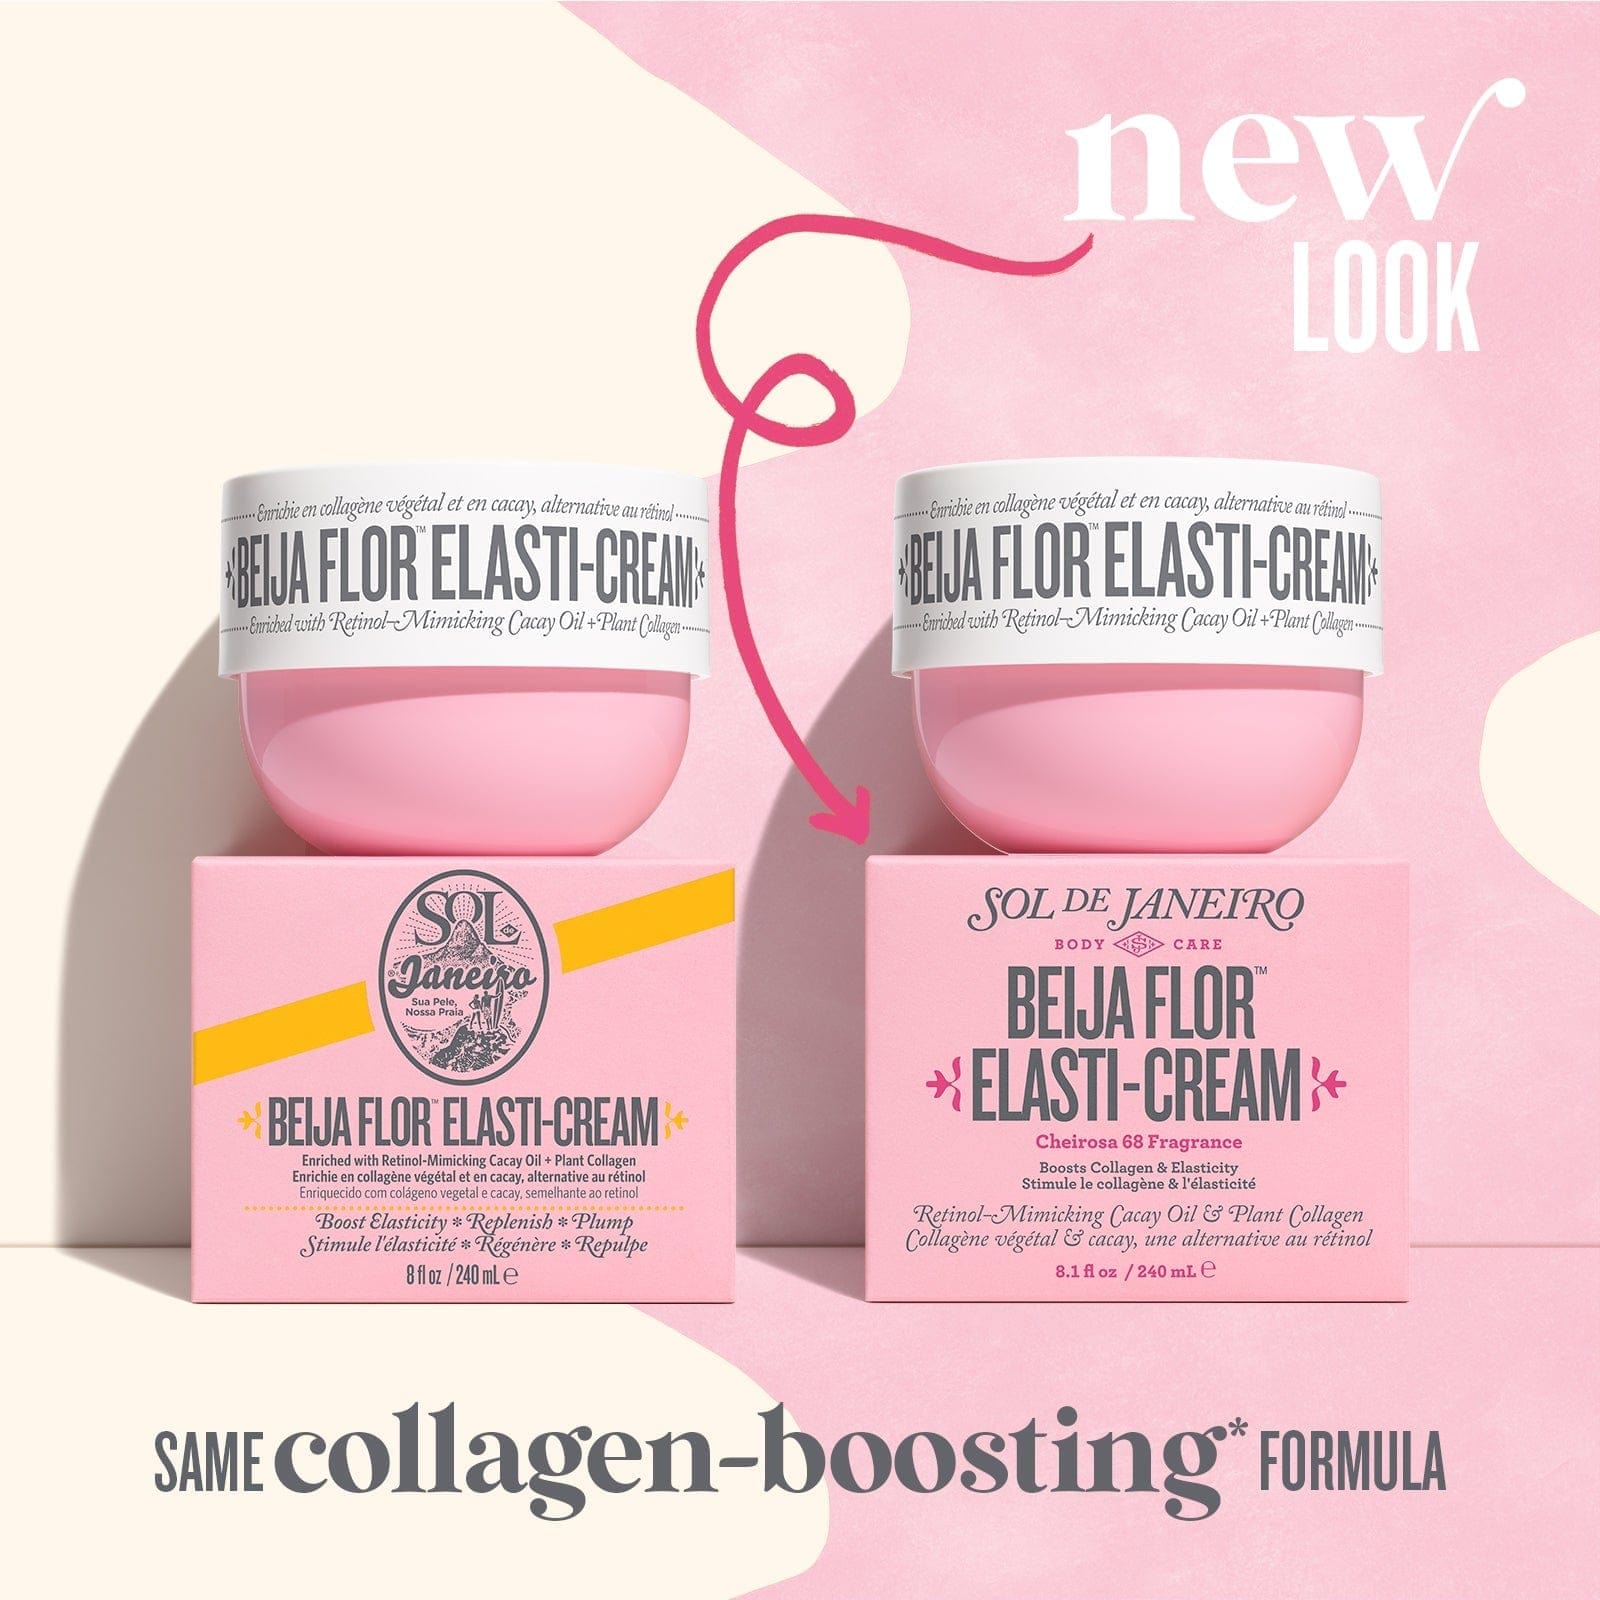 Beija Flor cream new look - same collagen boosting* formula